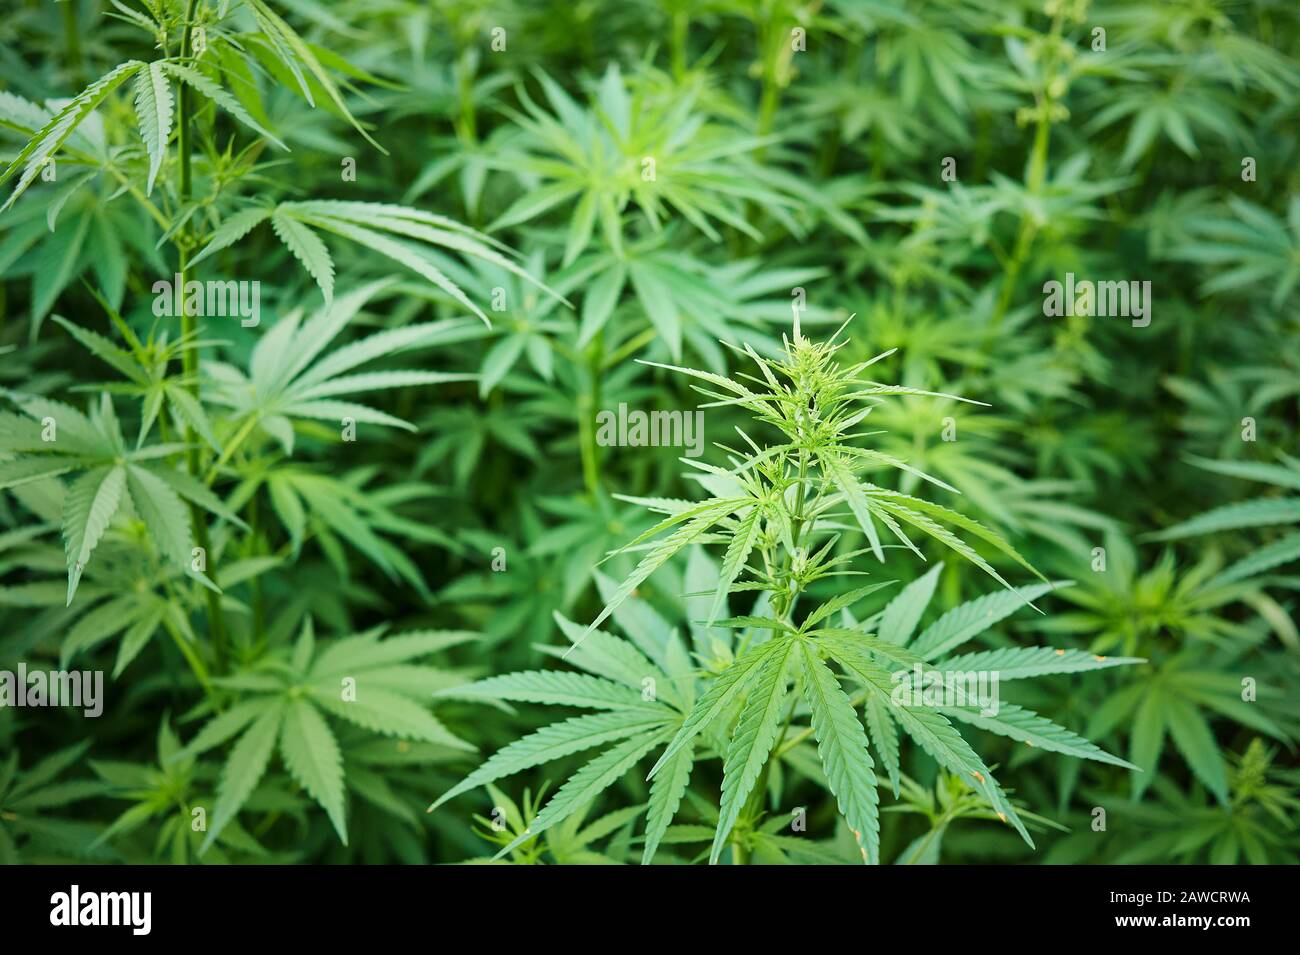 Background Texture of Marijuana Plants at Indoor Cannabis Farm with Flat Stock Photo